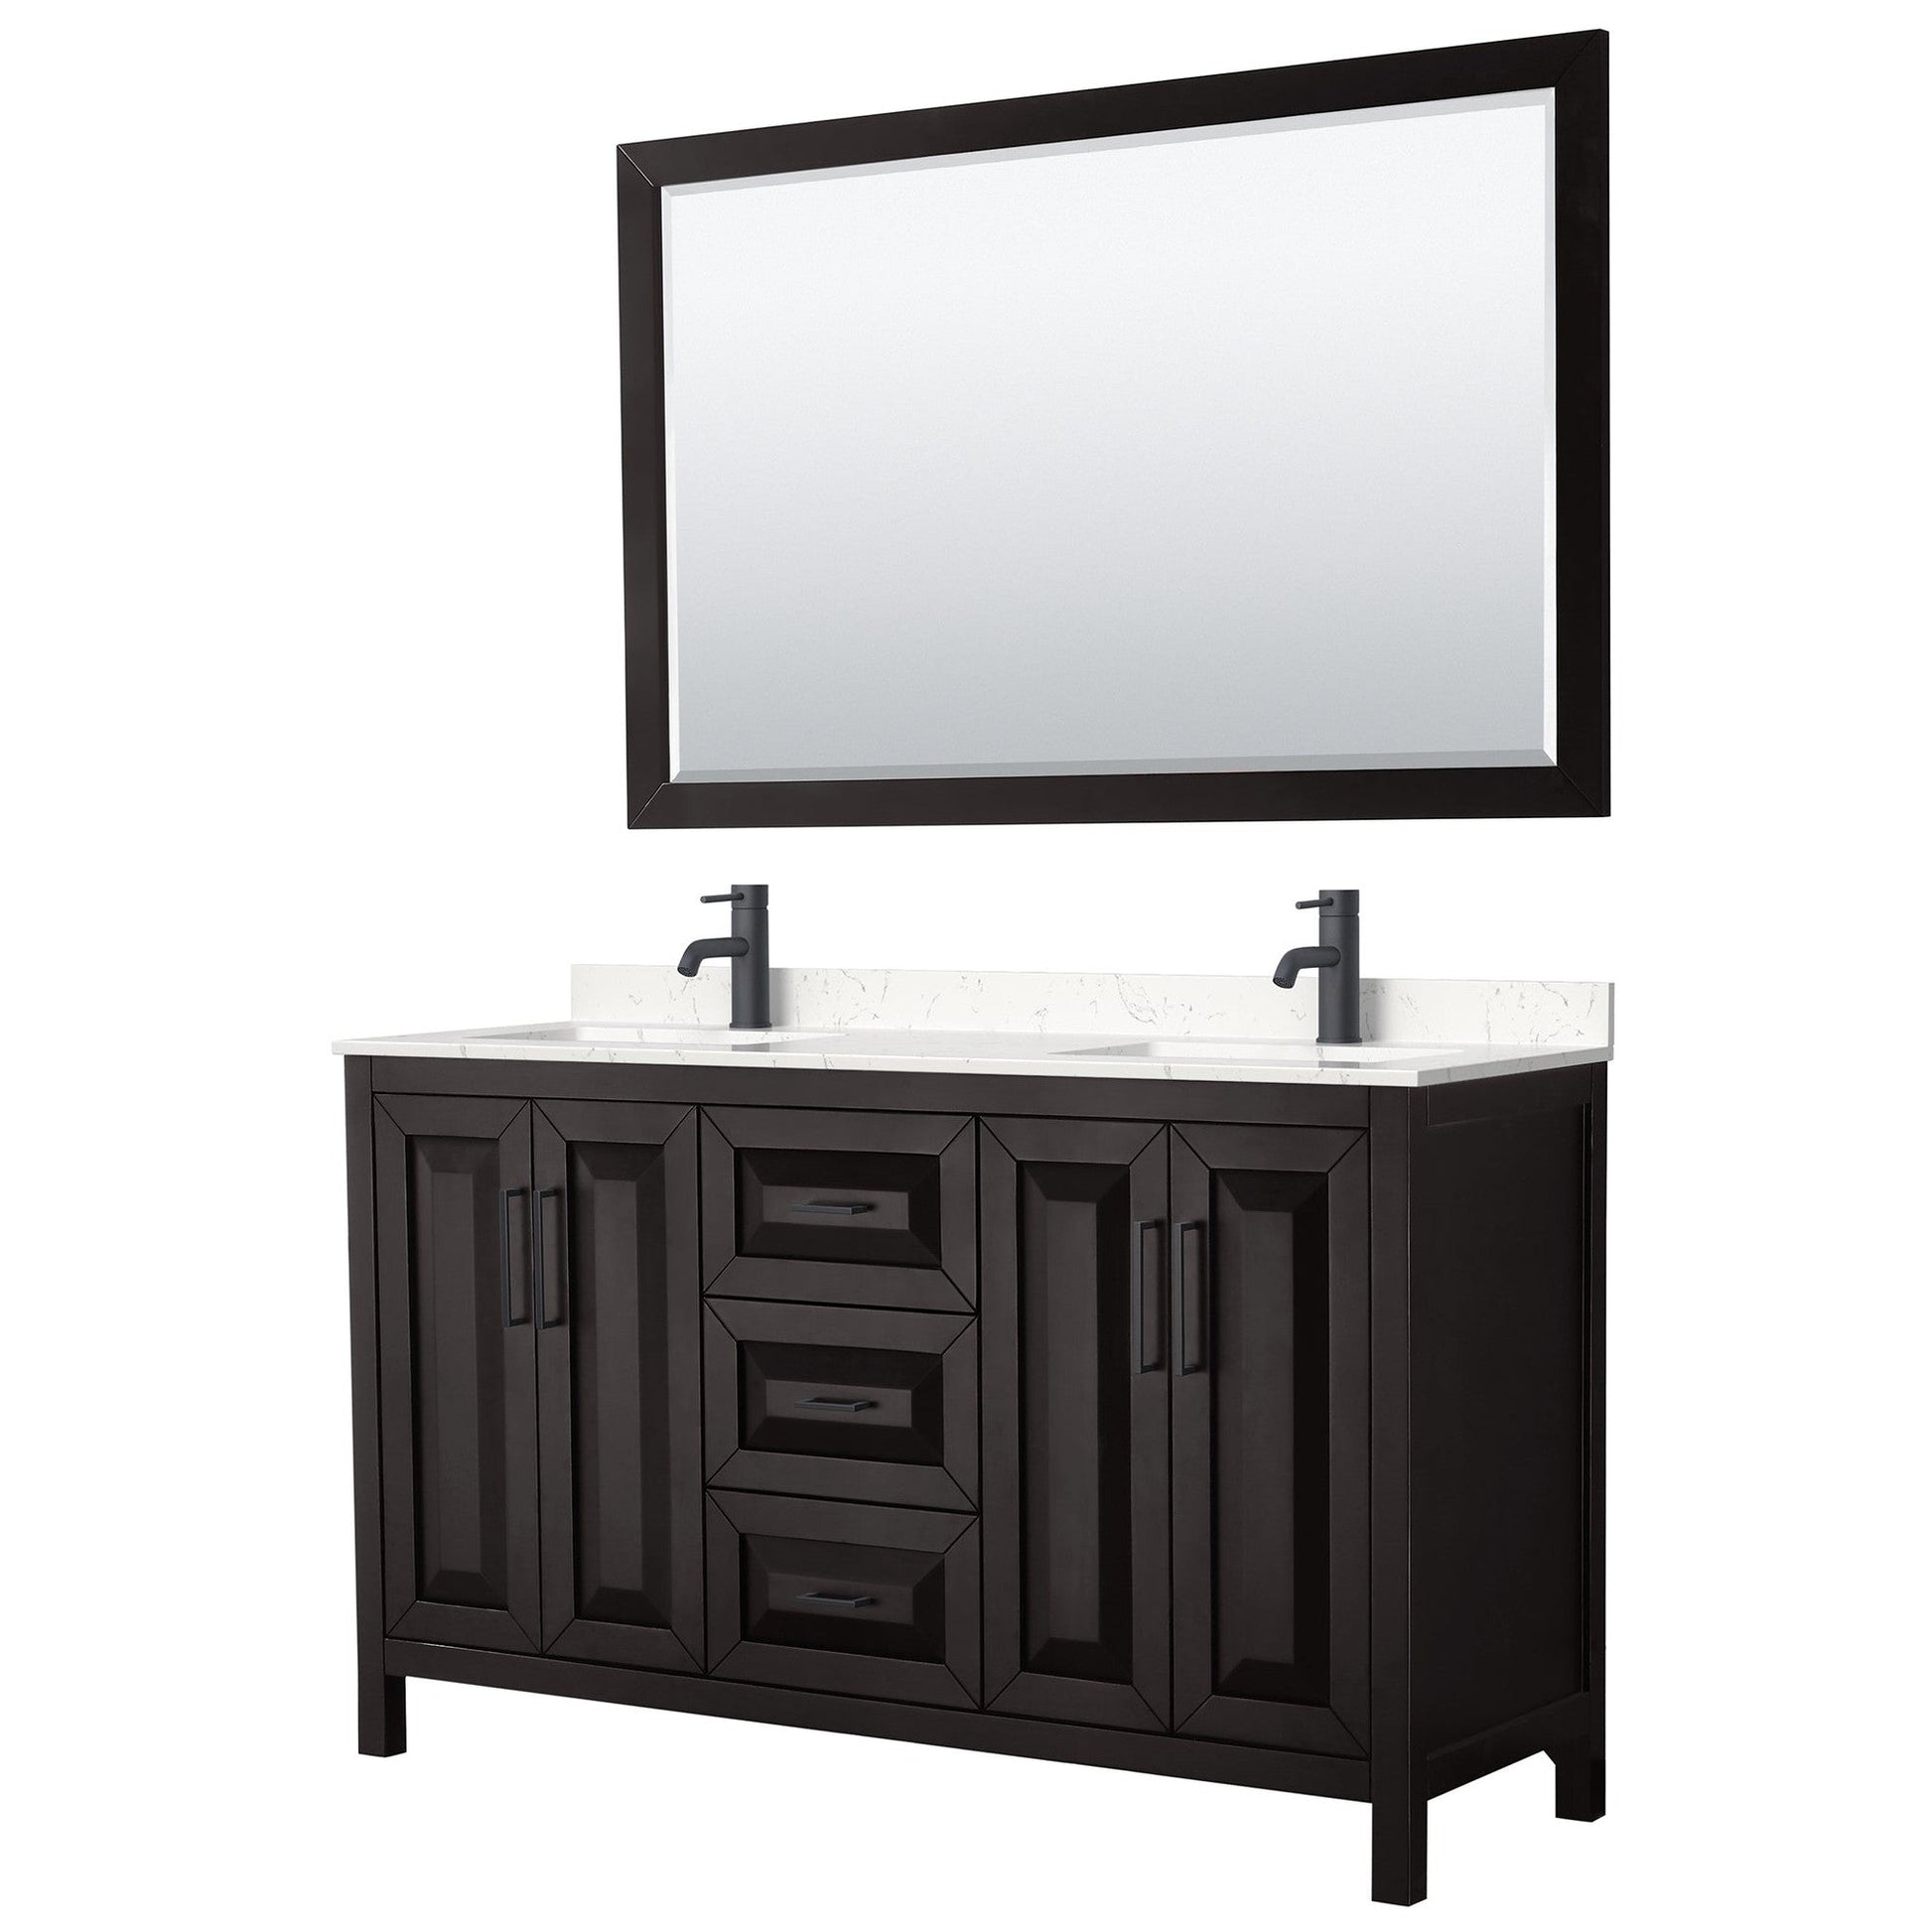 Daria 60" Double Bathroom Vanity in Dark Espresso, Carrara Cultured Marble Countertop, Undermount Square Sinks, Matte Black Trim, 58" Mirror